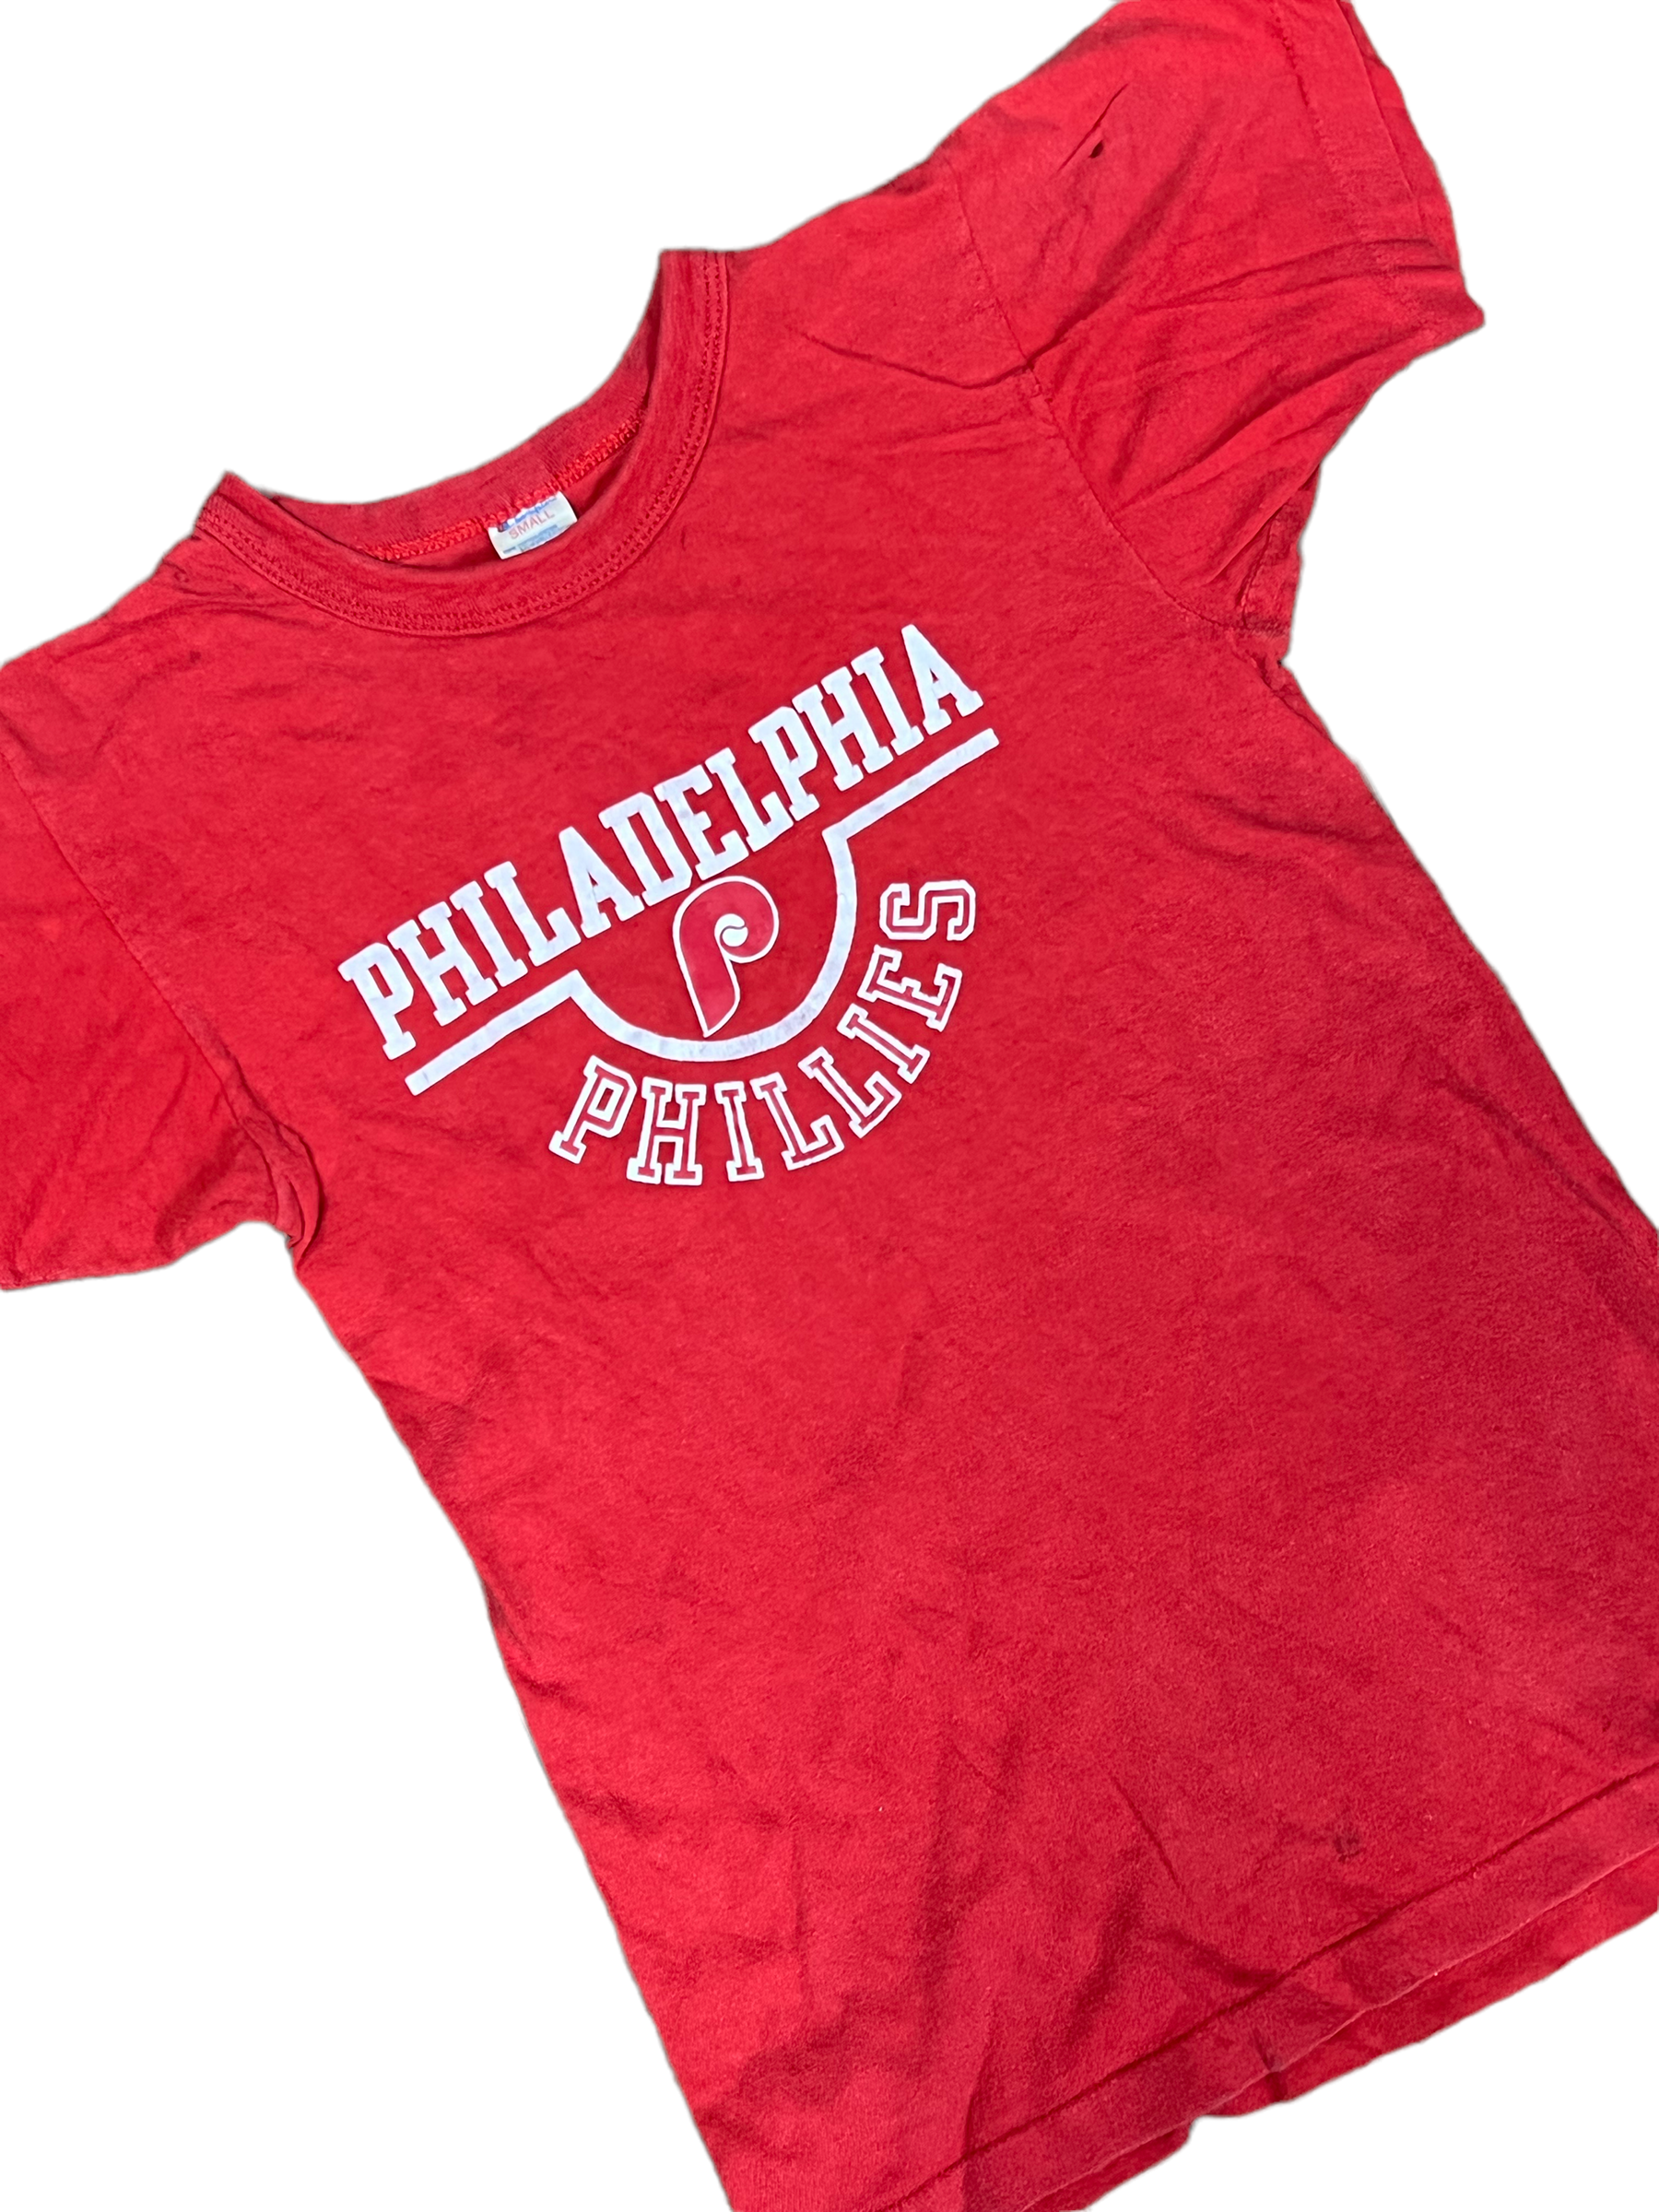 philadelphia phillies t shirt